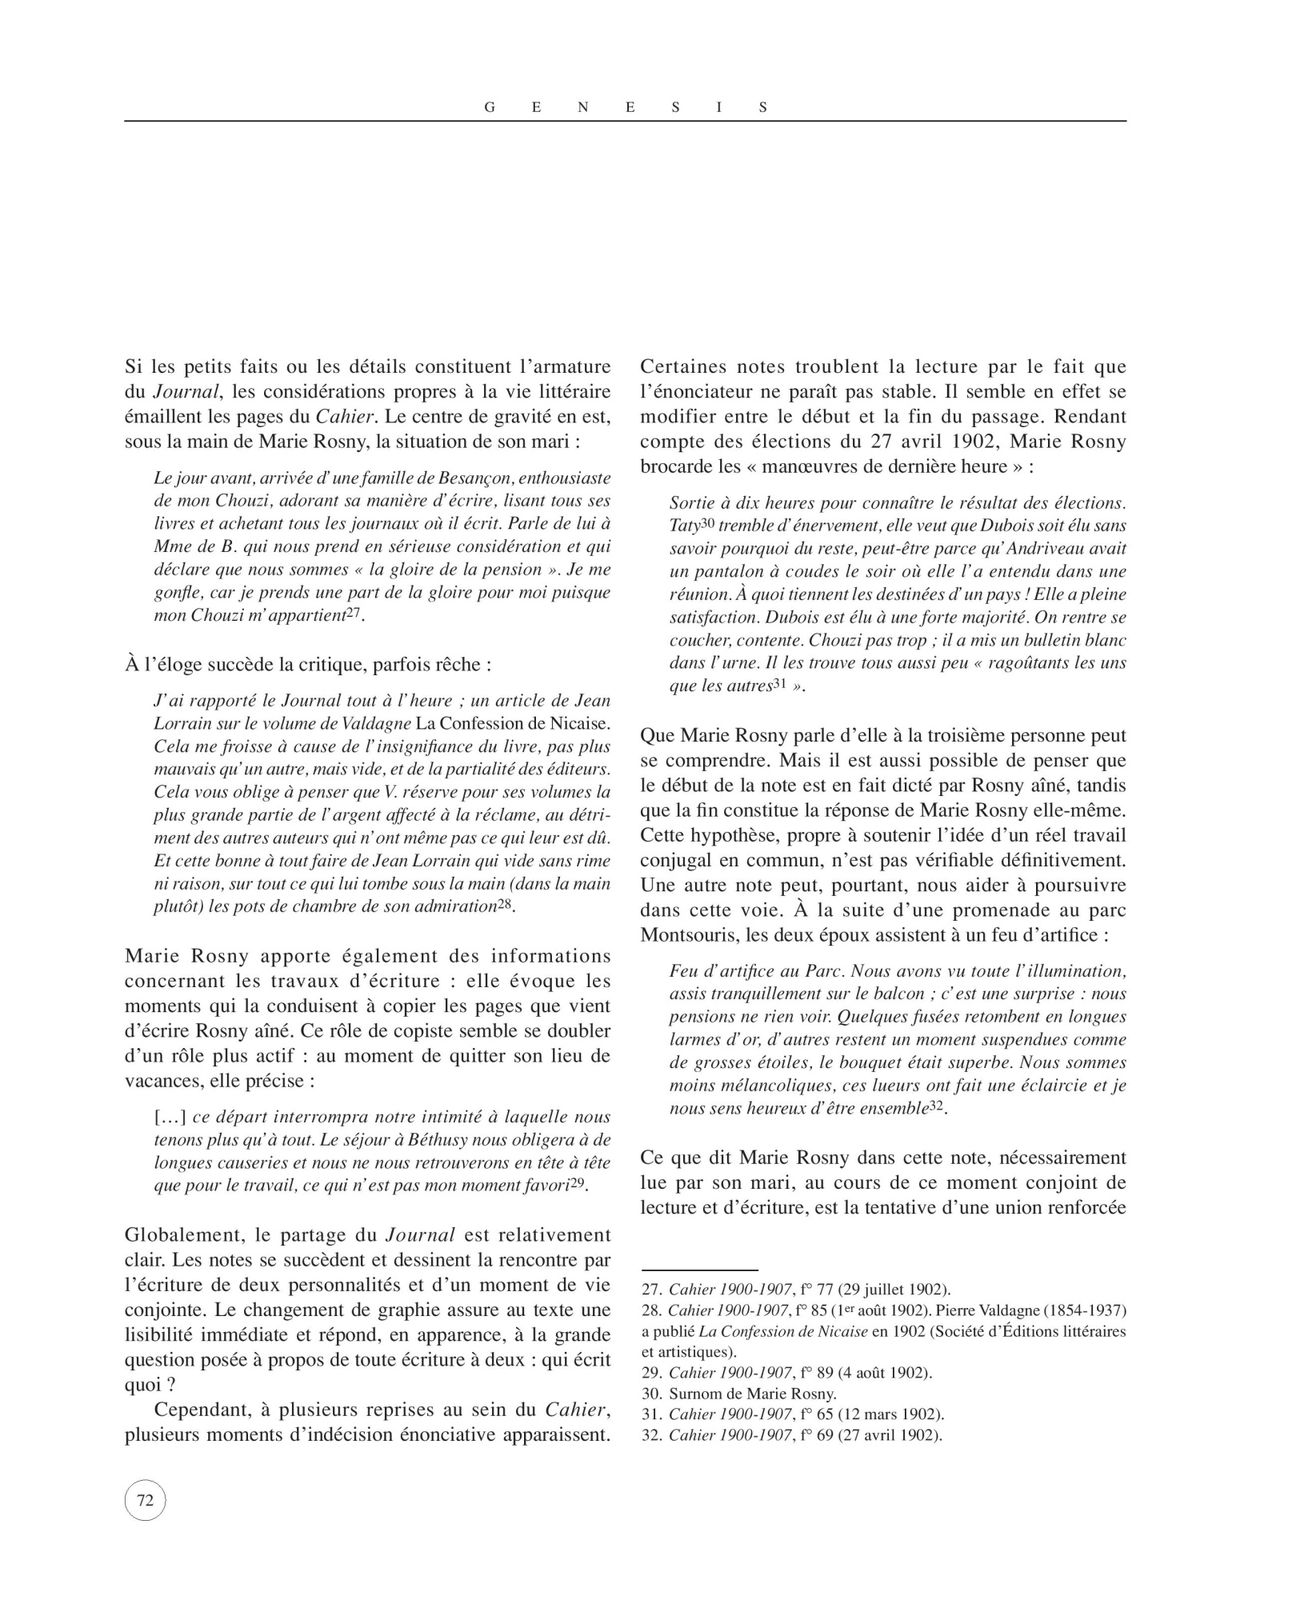 Jean-Michel Pottier "J.-H. et Marie Rosny, un journal conjugal. Le Cahier 1900-1907" in Genesis n°32 : Journaux personnels (2011)